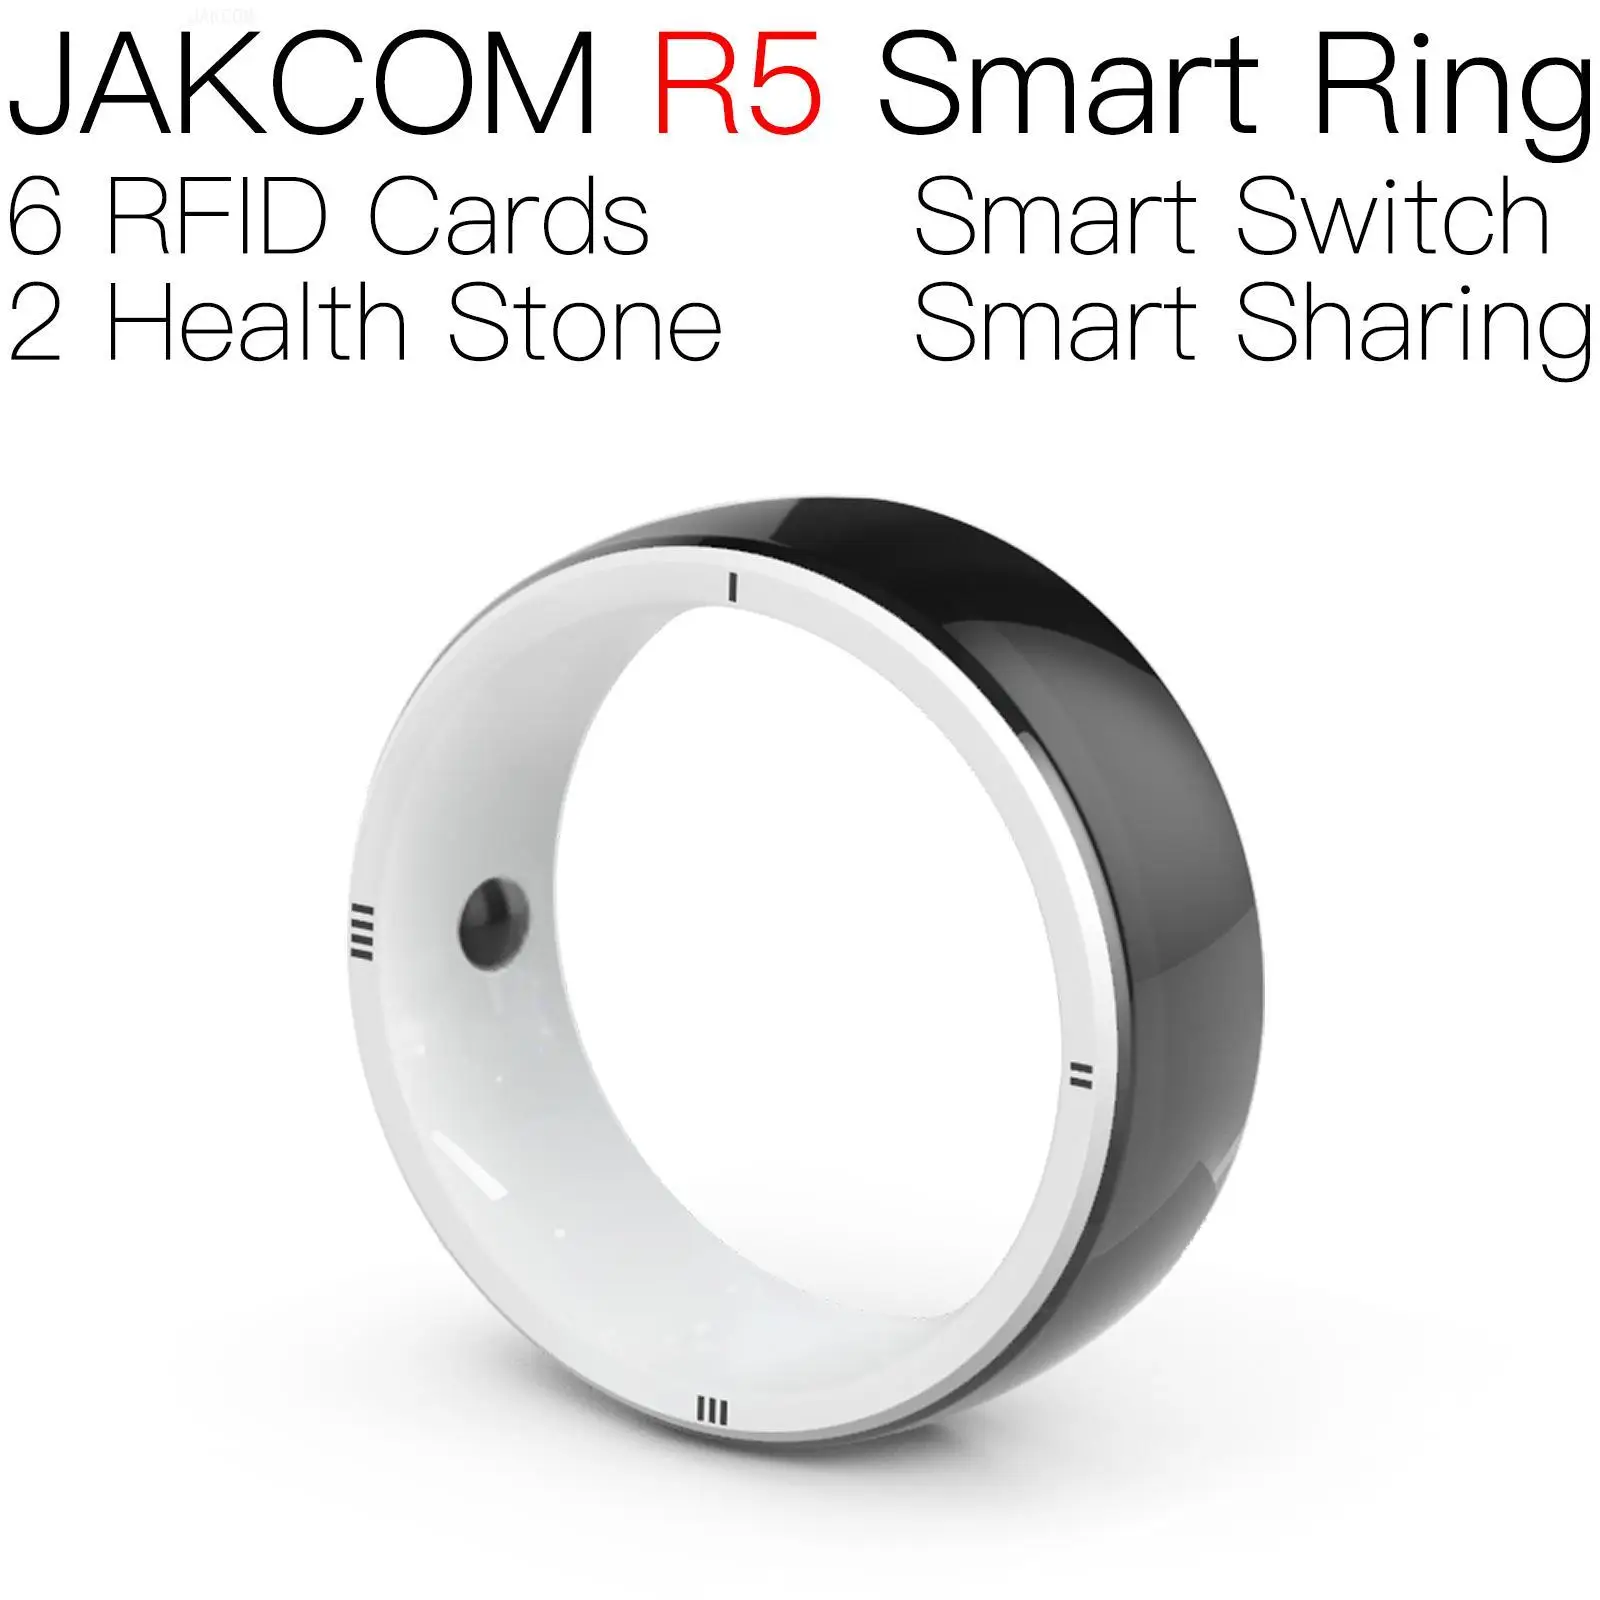 

JAKCOM R5 Smart Ring For men women rf reader module rfid card pic printer m26 plus hc 301m fpc nfc tk4100 chip tag sticker dual